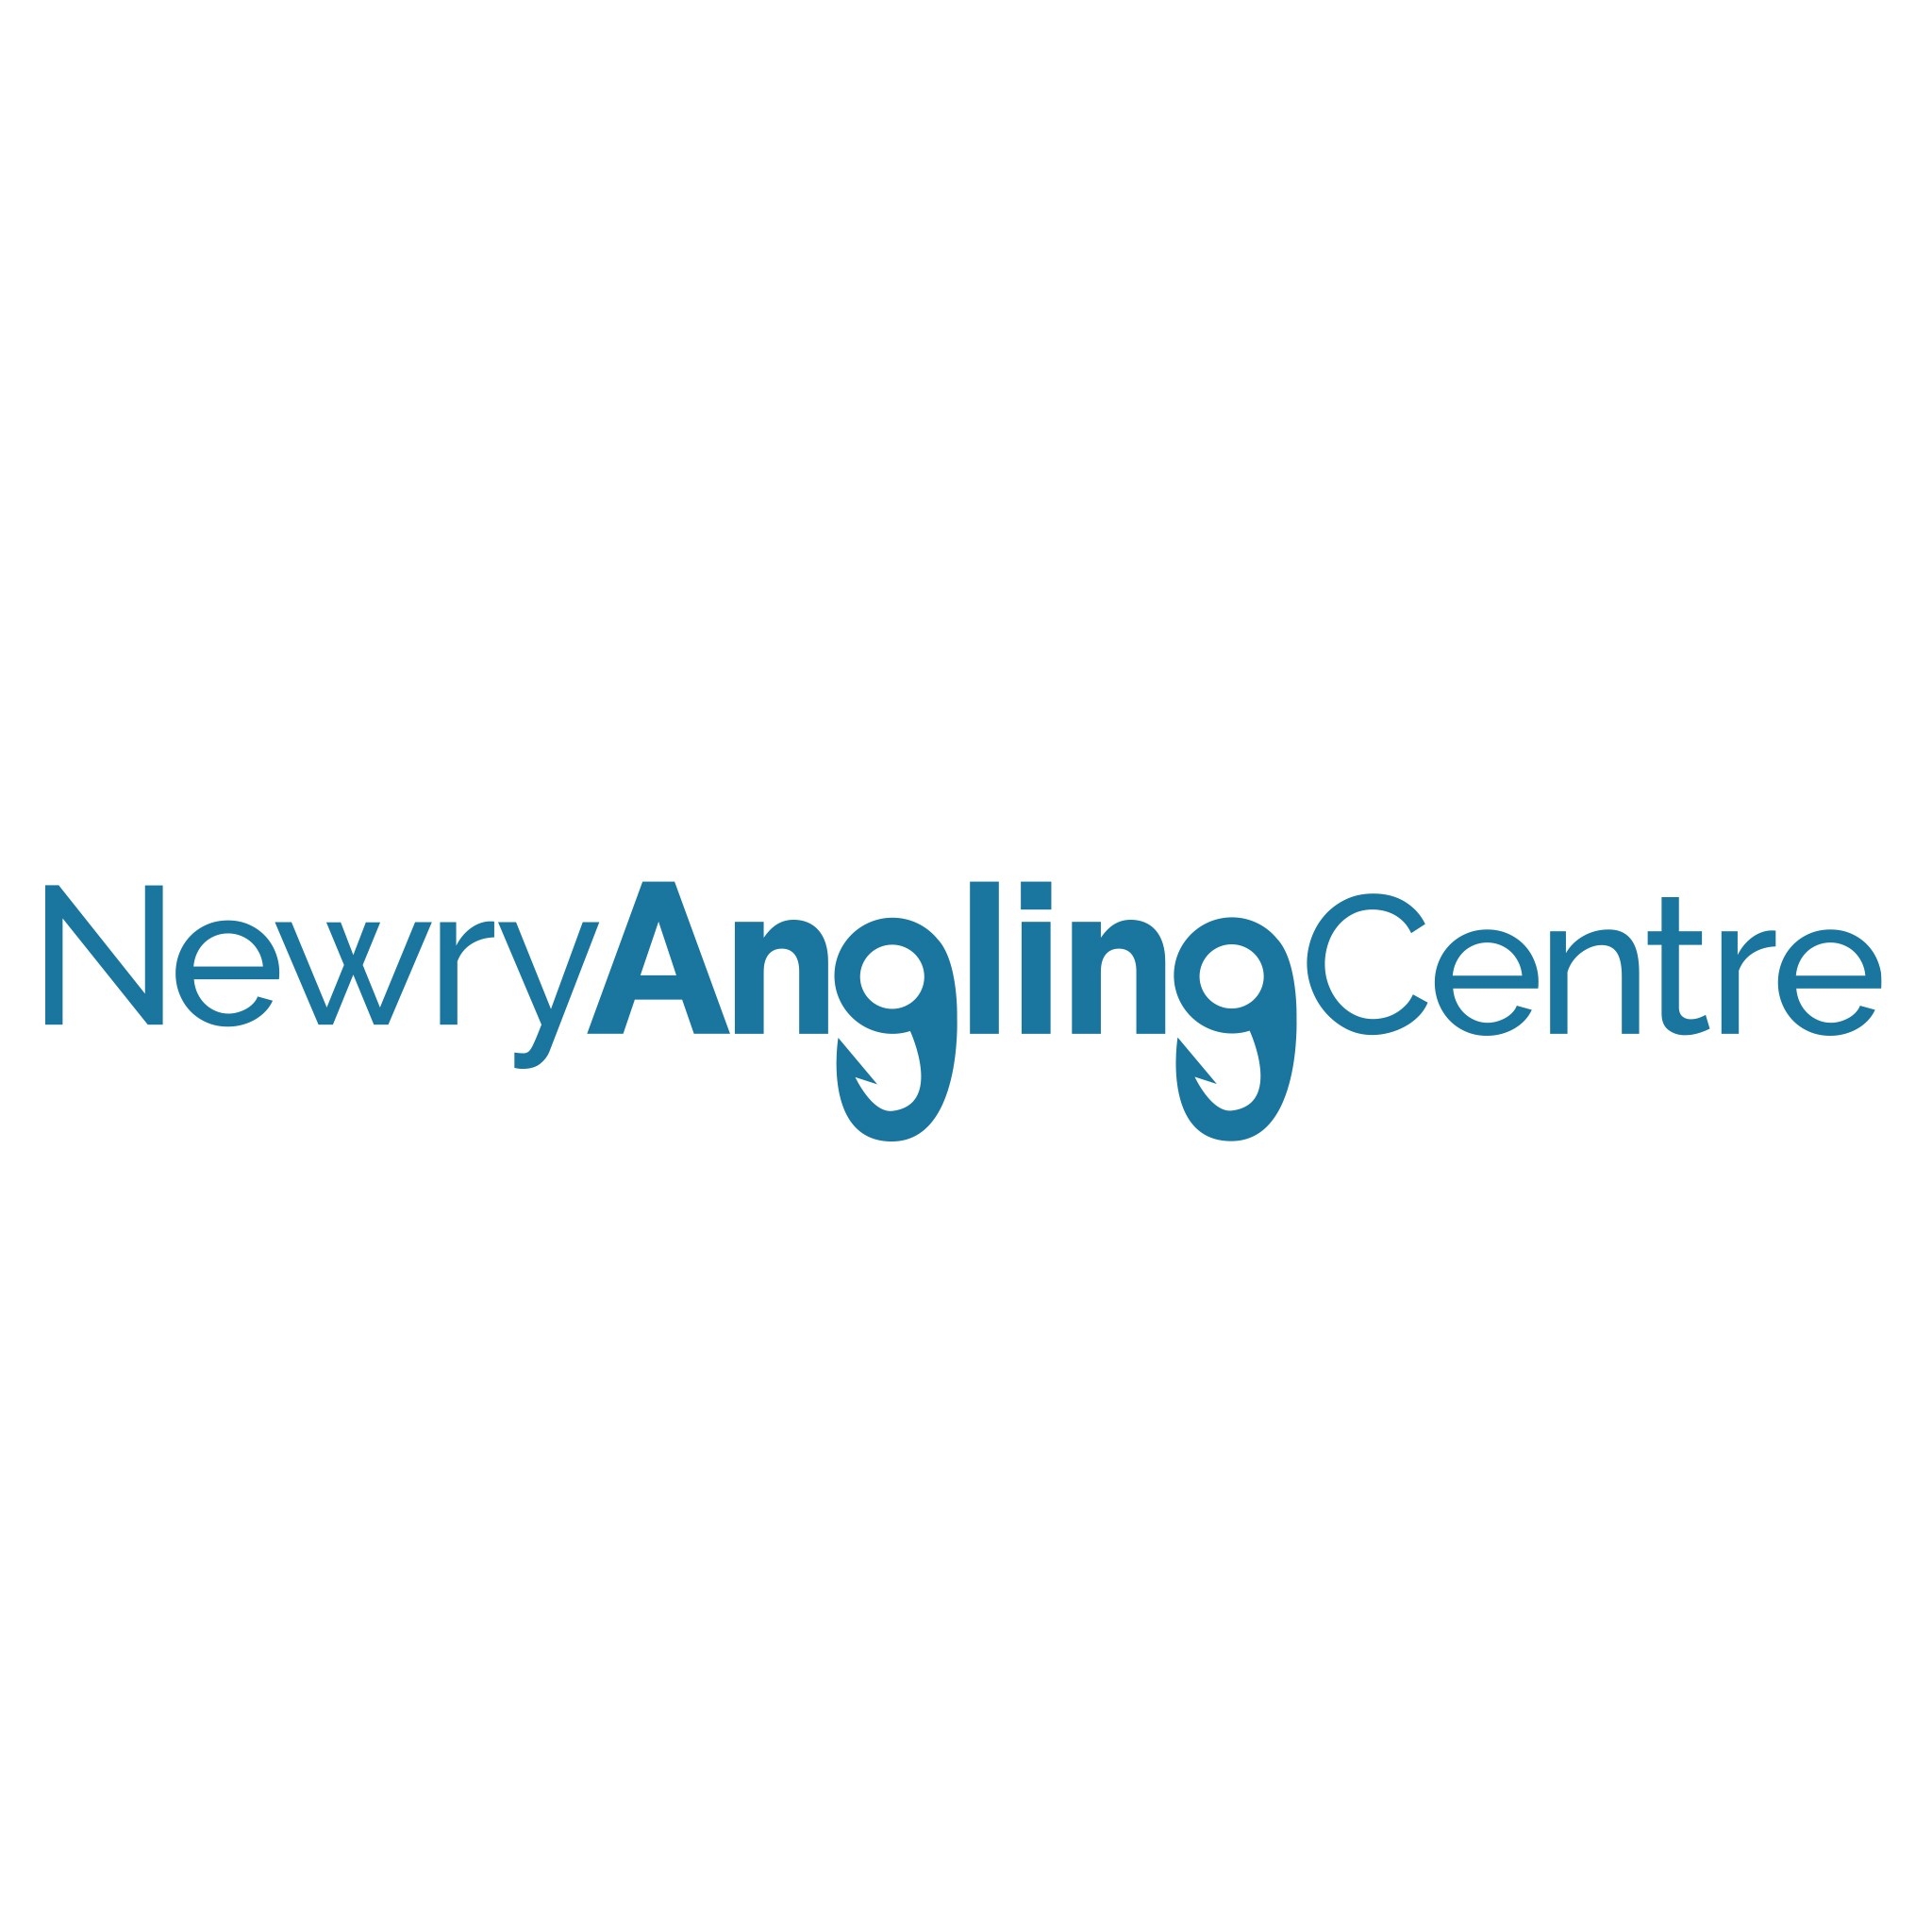 Newry Angling Centre